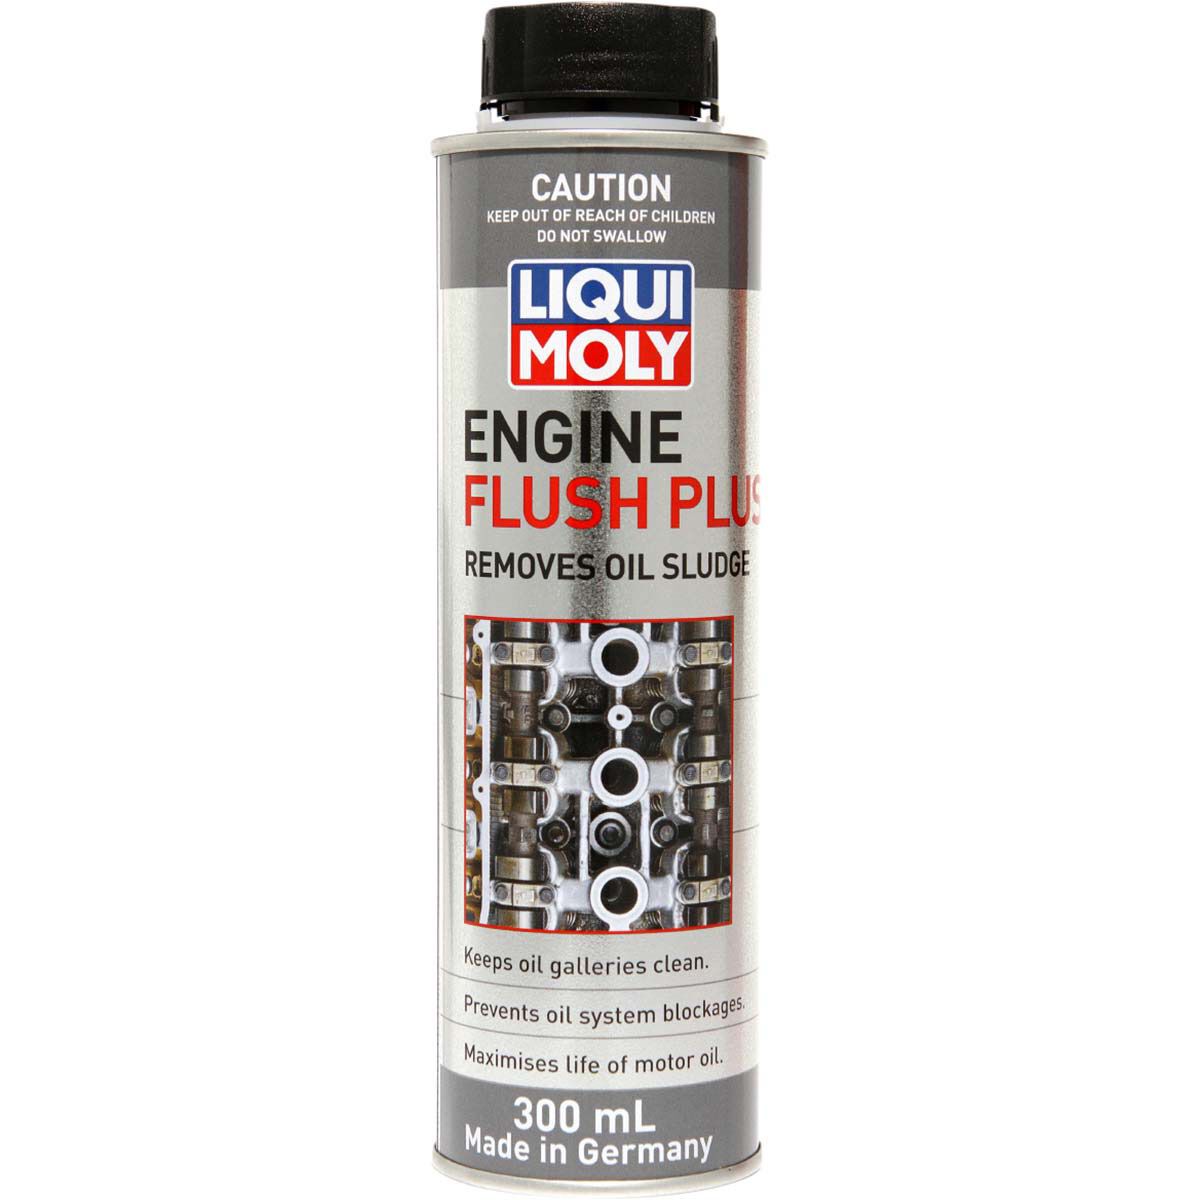 Liqui Moly 2037 Liqui Moly Pro-Line Engine Flush | Summit Racing